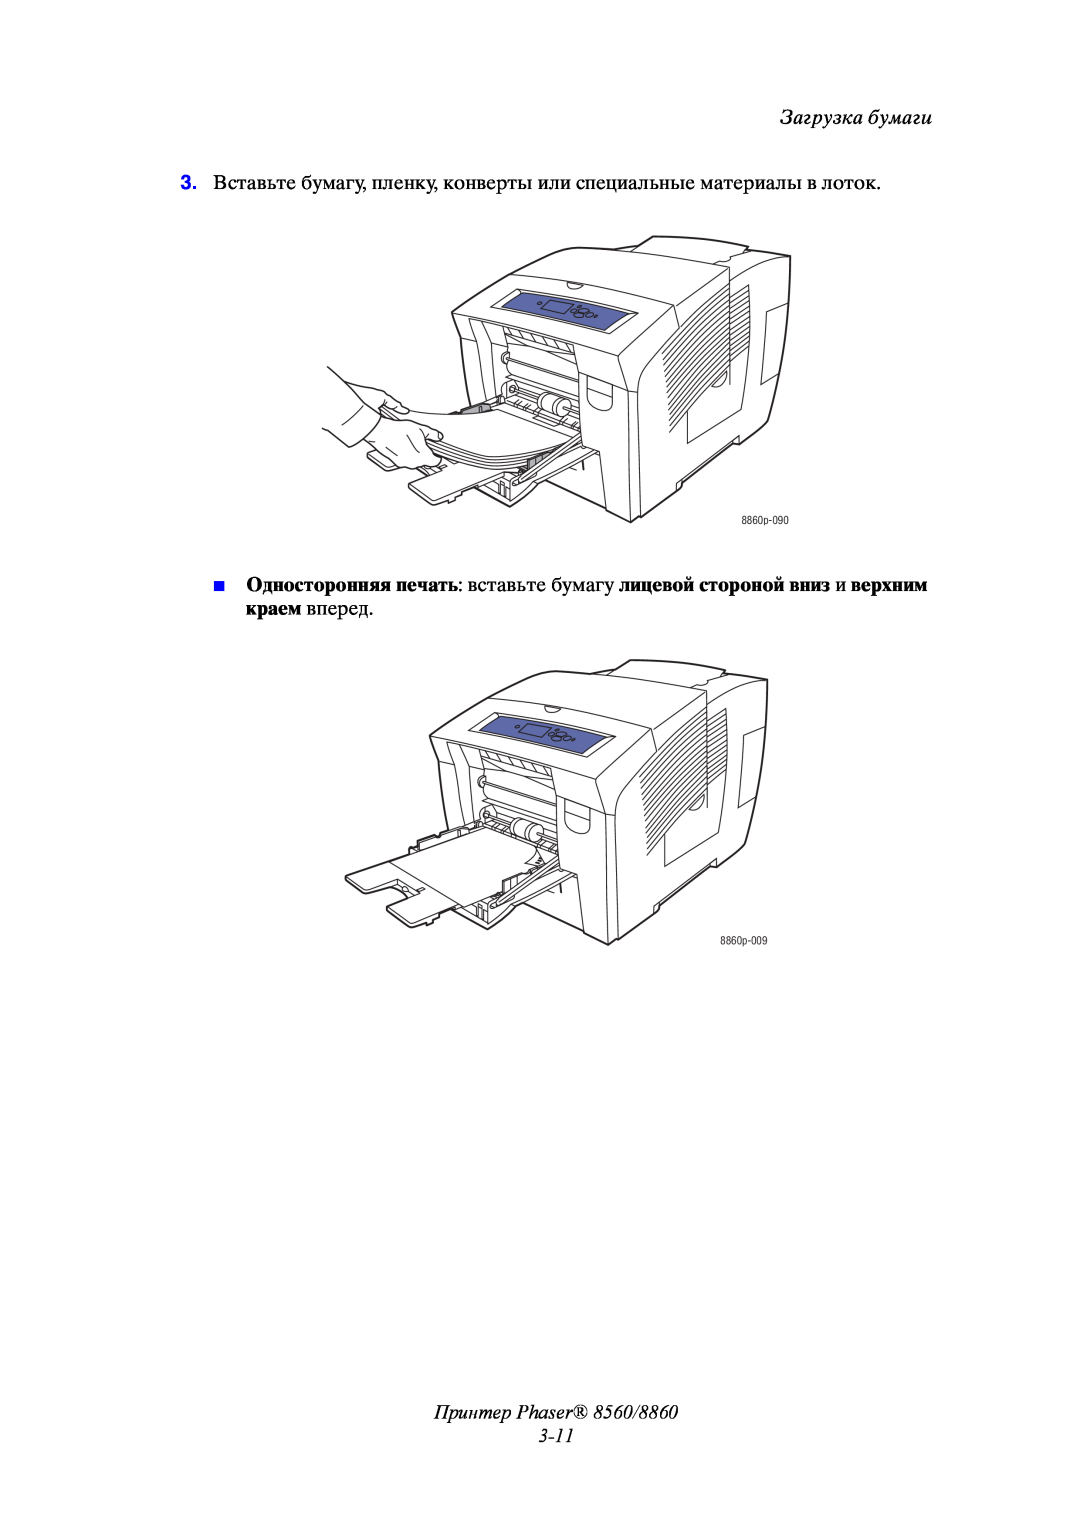 Xerox manual Принтер Phaser 8560/8860 3-11, Загрузка бумаги, 8860p-090, 8860p-009 